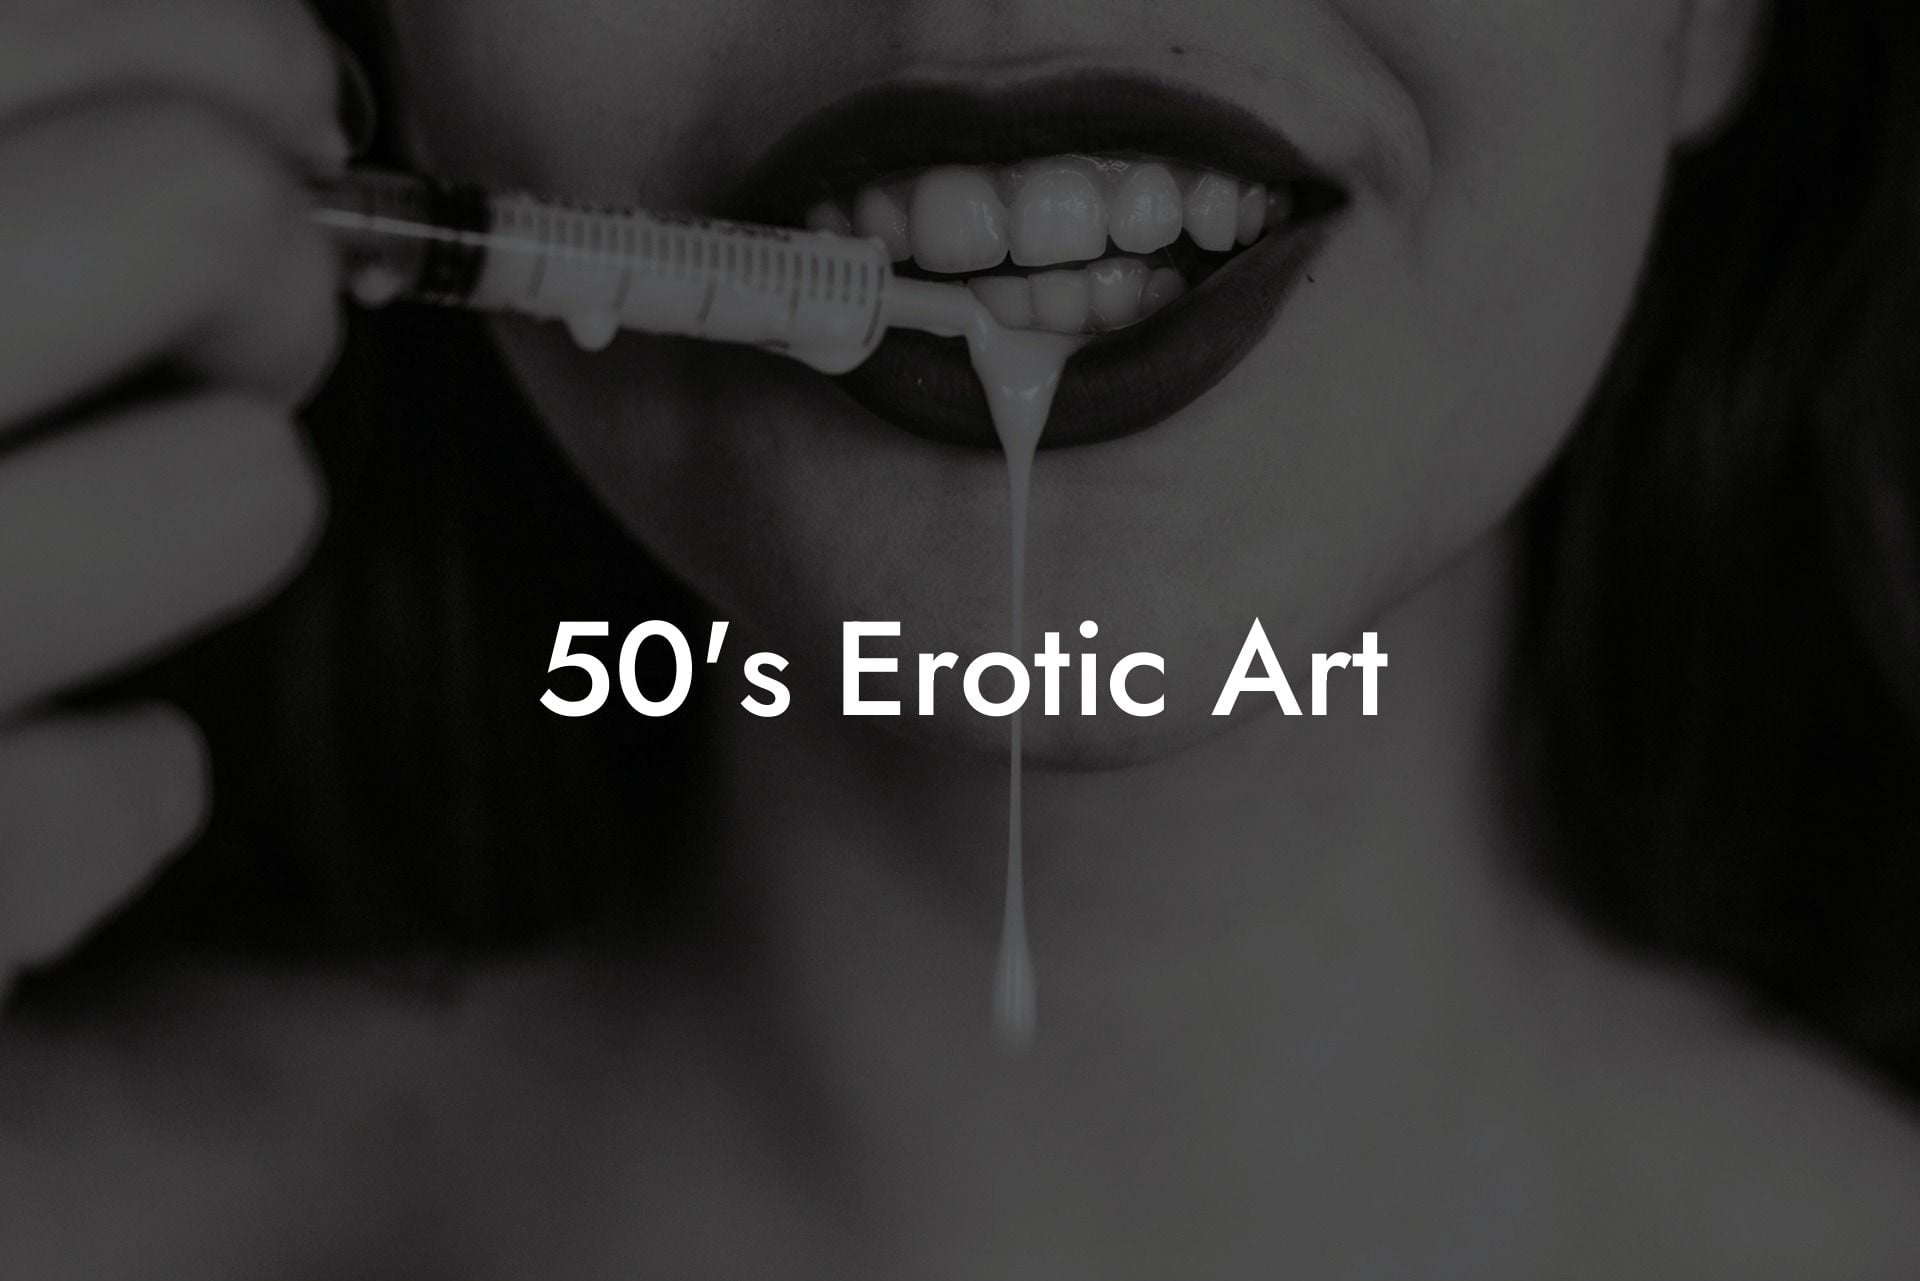 50's Erotic Art